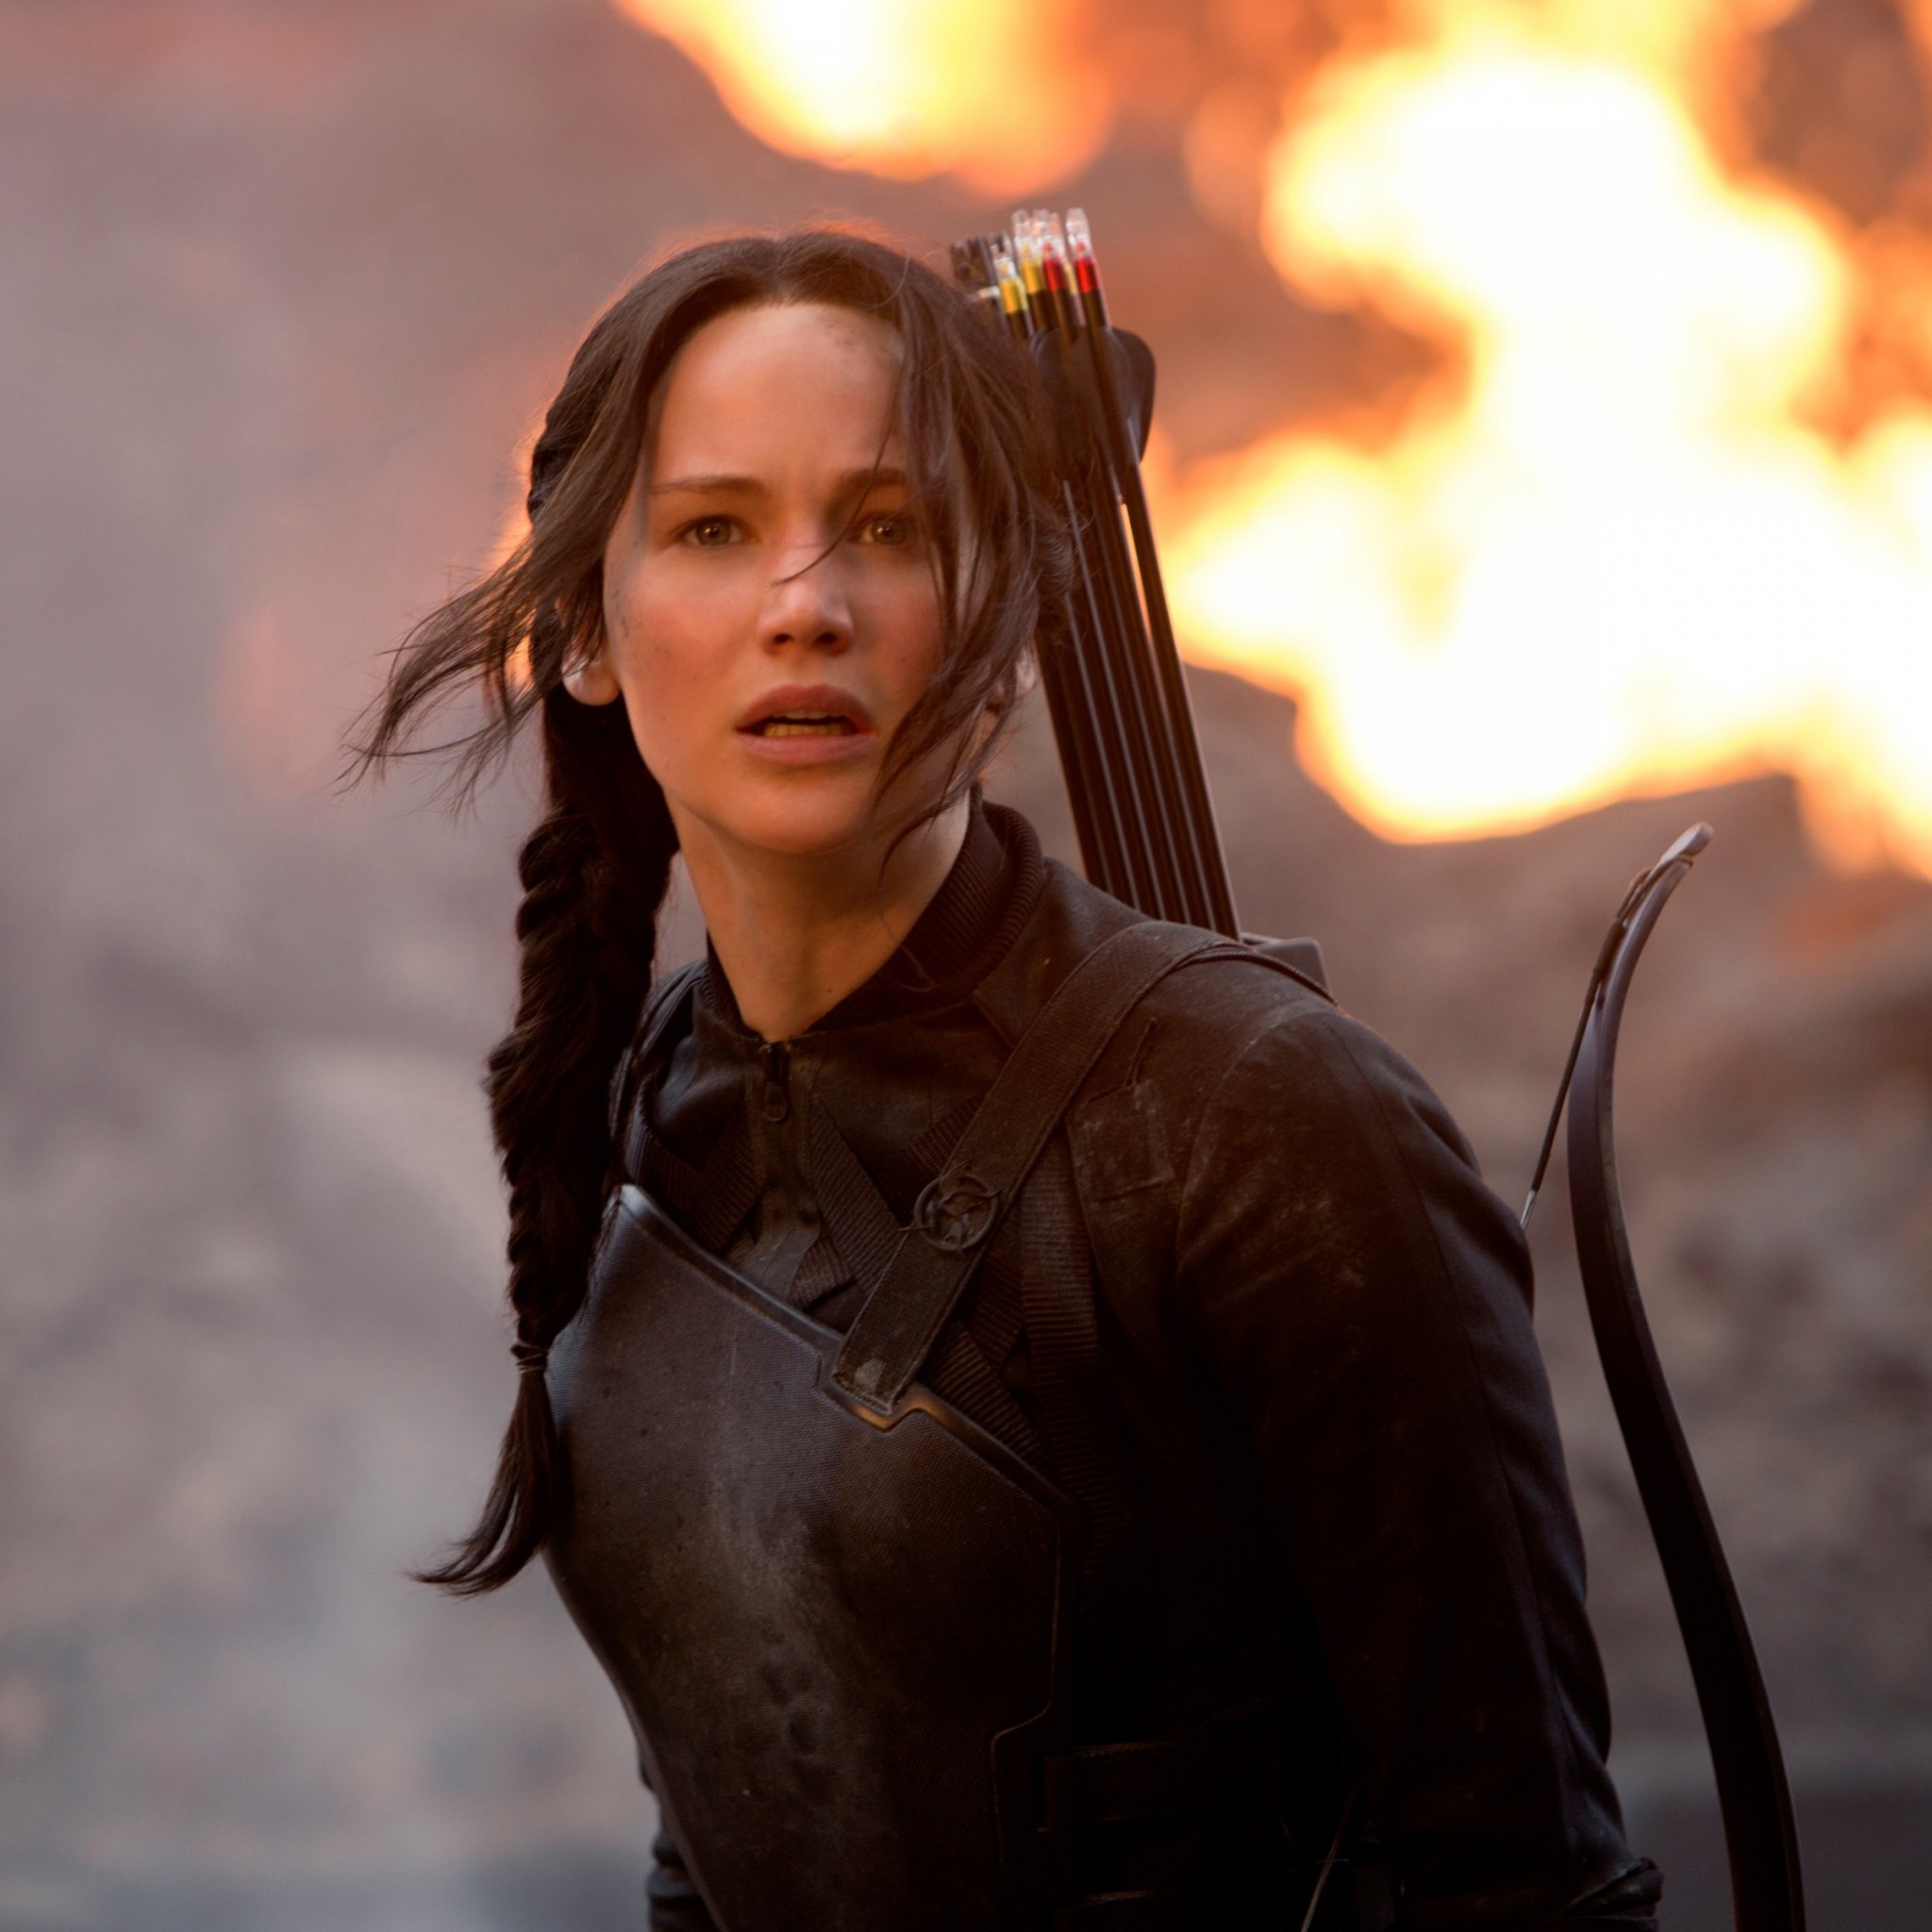 Jennifer Lawrence in The Hunger Games Wallpaper for Google Nexus 9